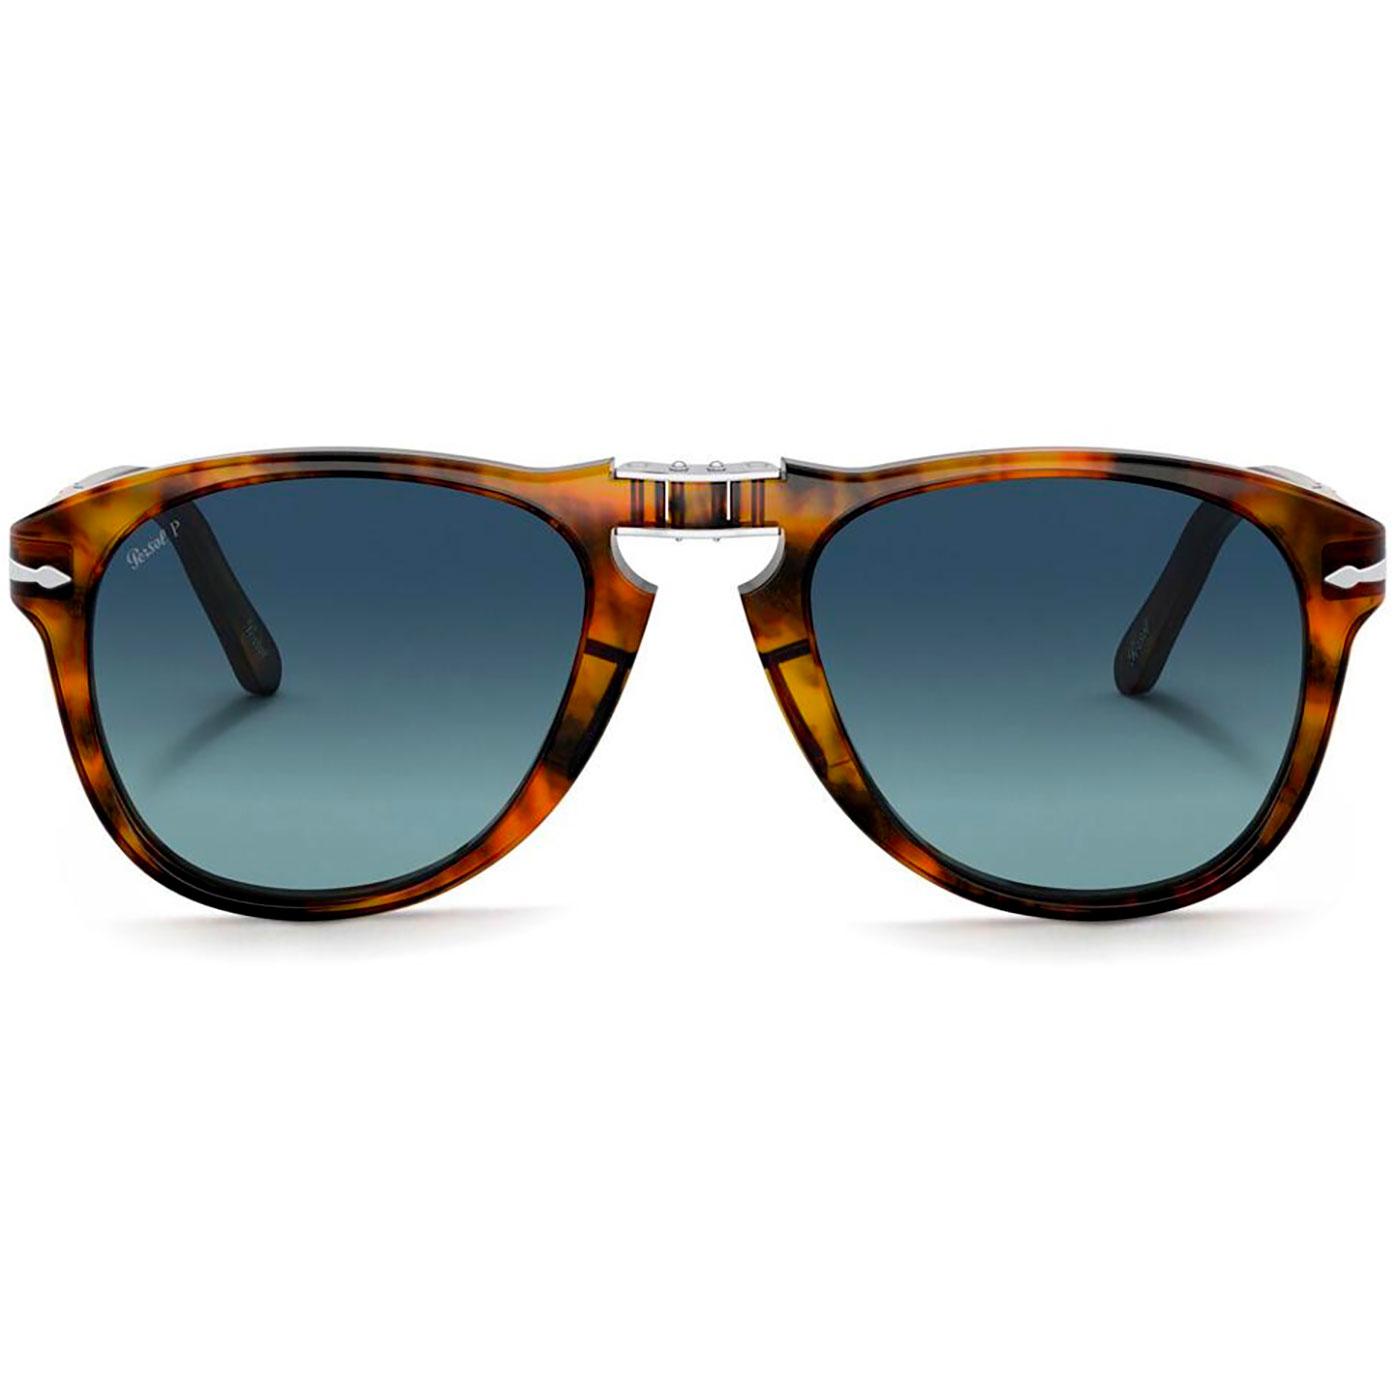 PERSOL Steve McQueen 714SM Foldable Sunglasses in Caffe